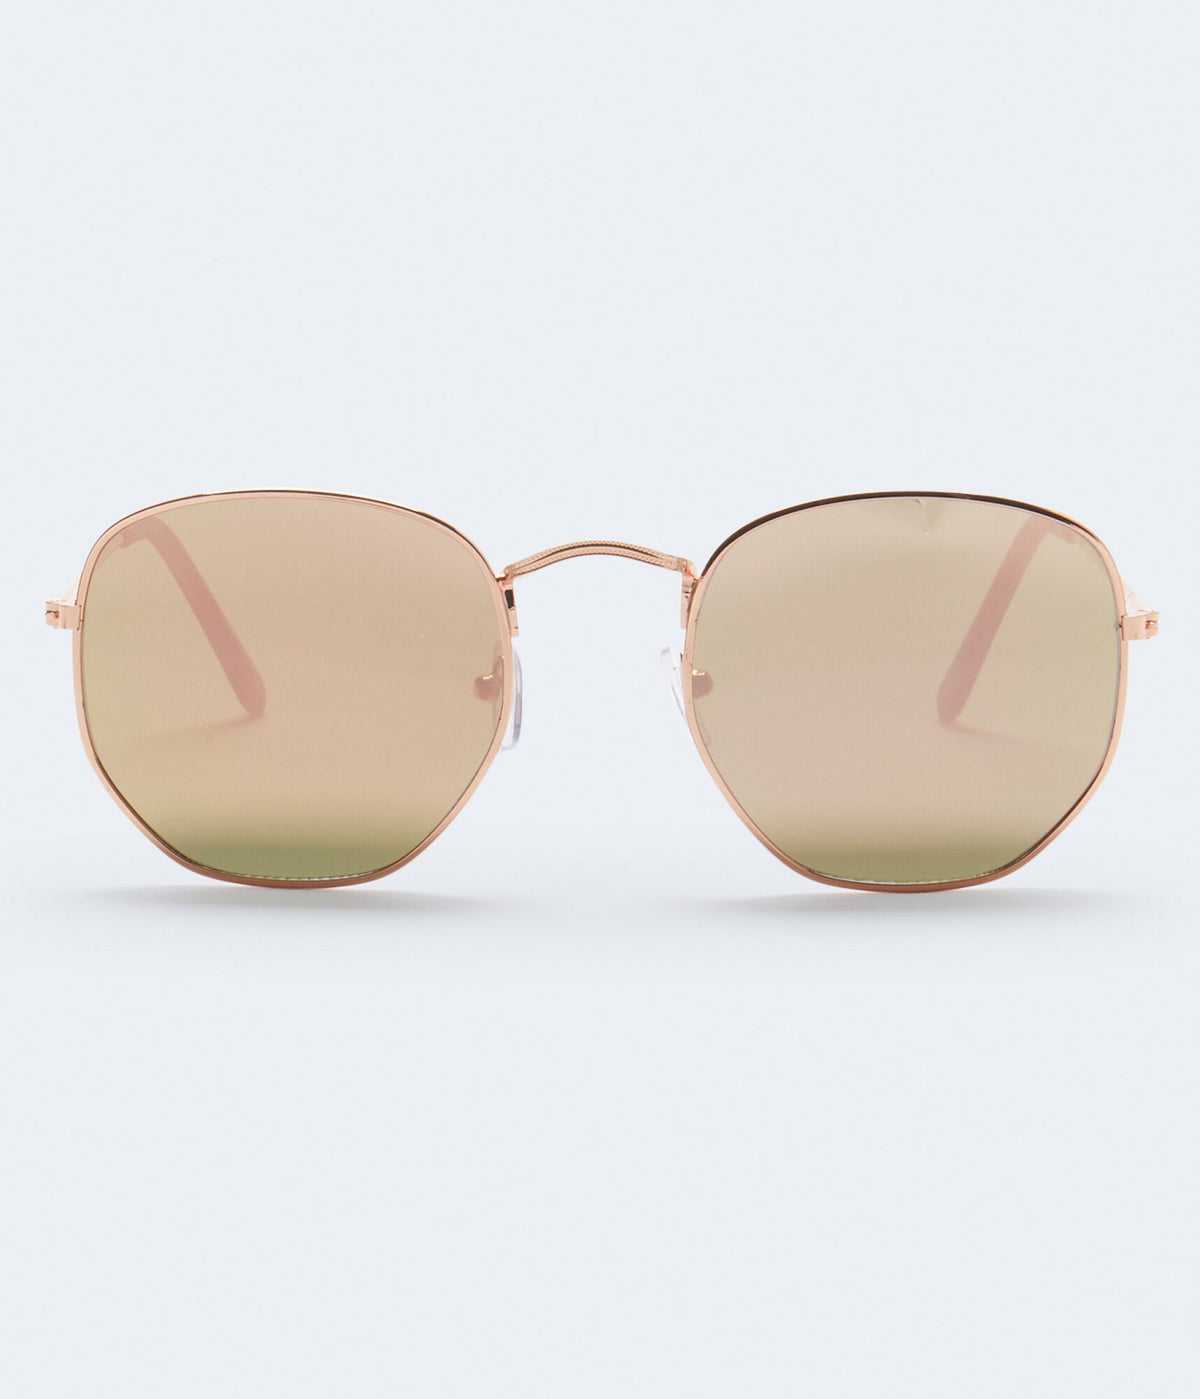 Aeropostale Womens' Rounded Geometric Sunglasses - -colored - Size One Size - Plastic - Teen Fashion & Clothing Multi